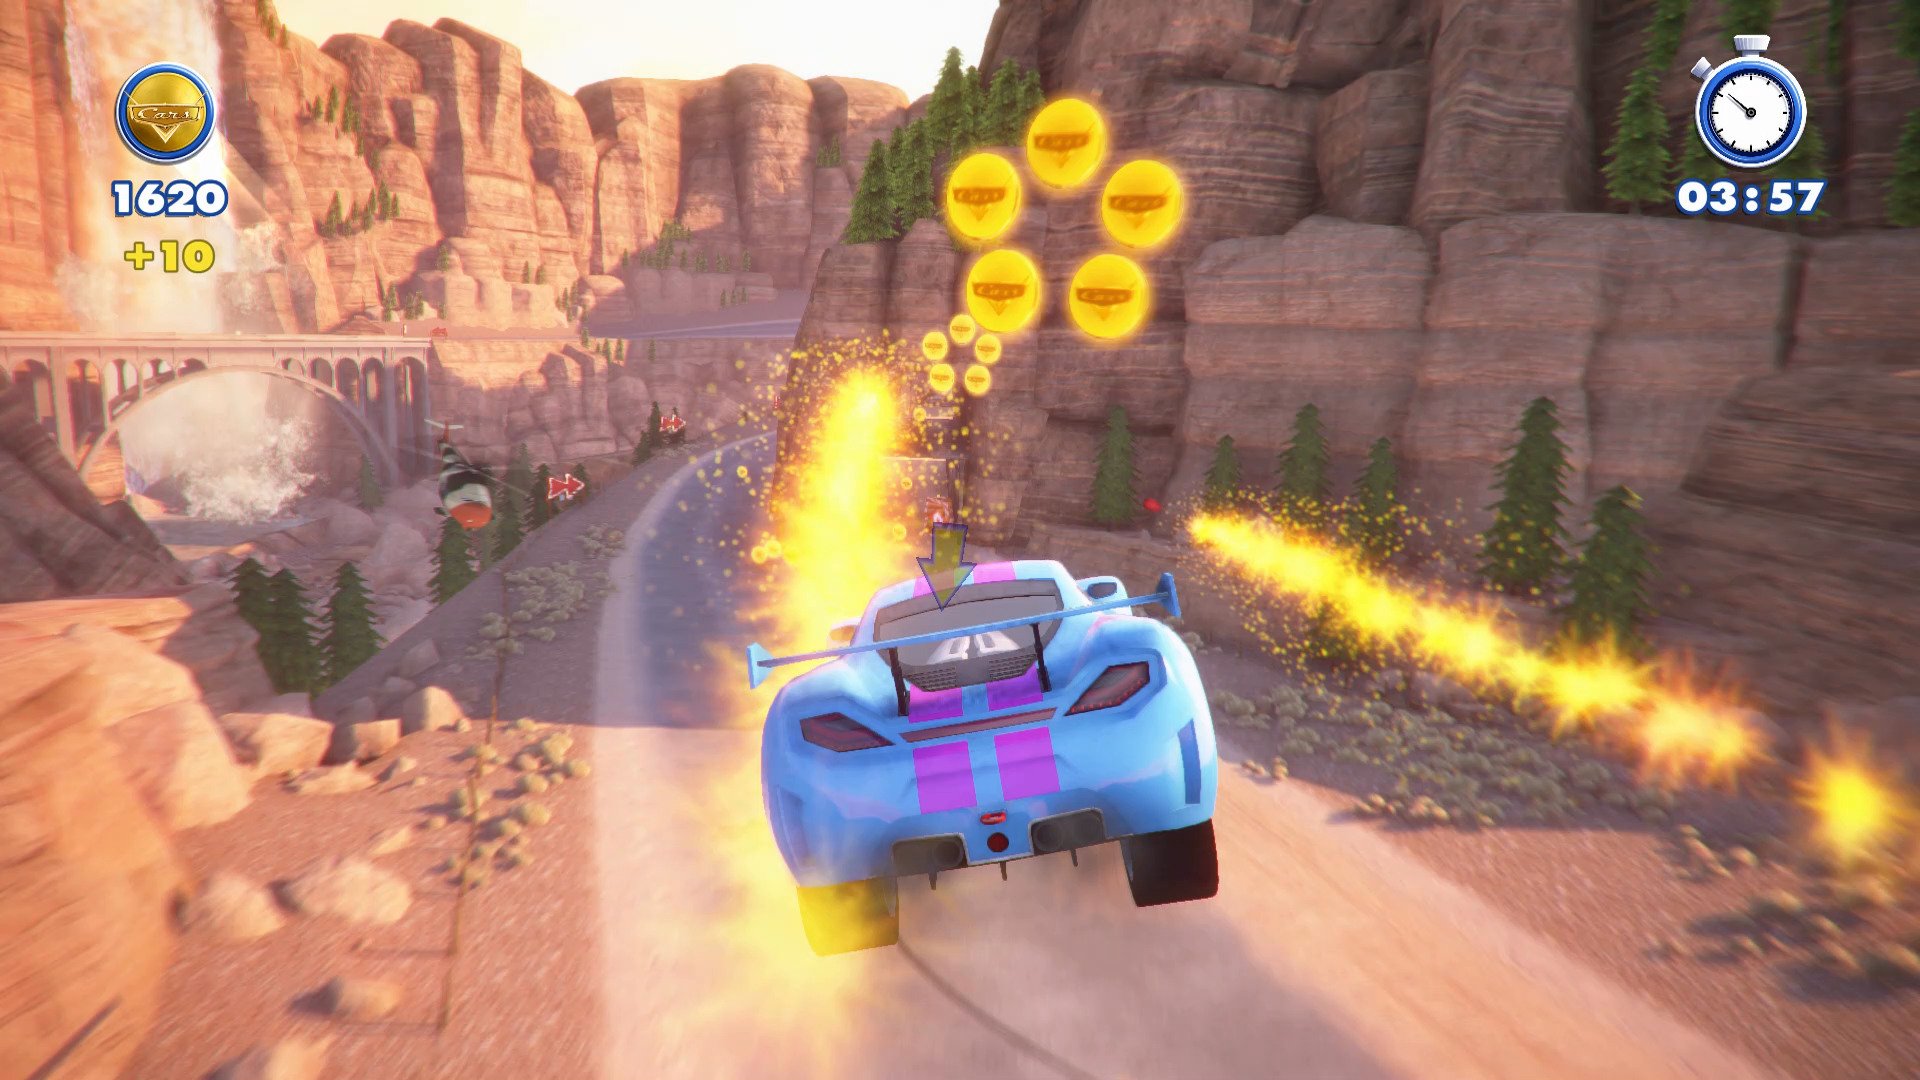 Rush: A Disney/Pixar Adventure for Xbox One Cars